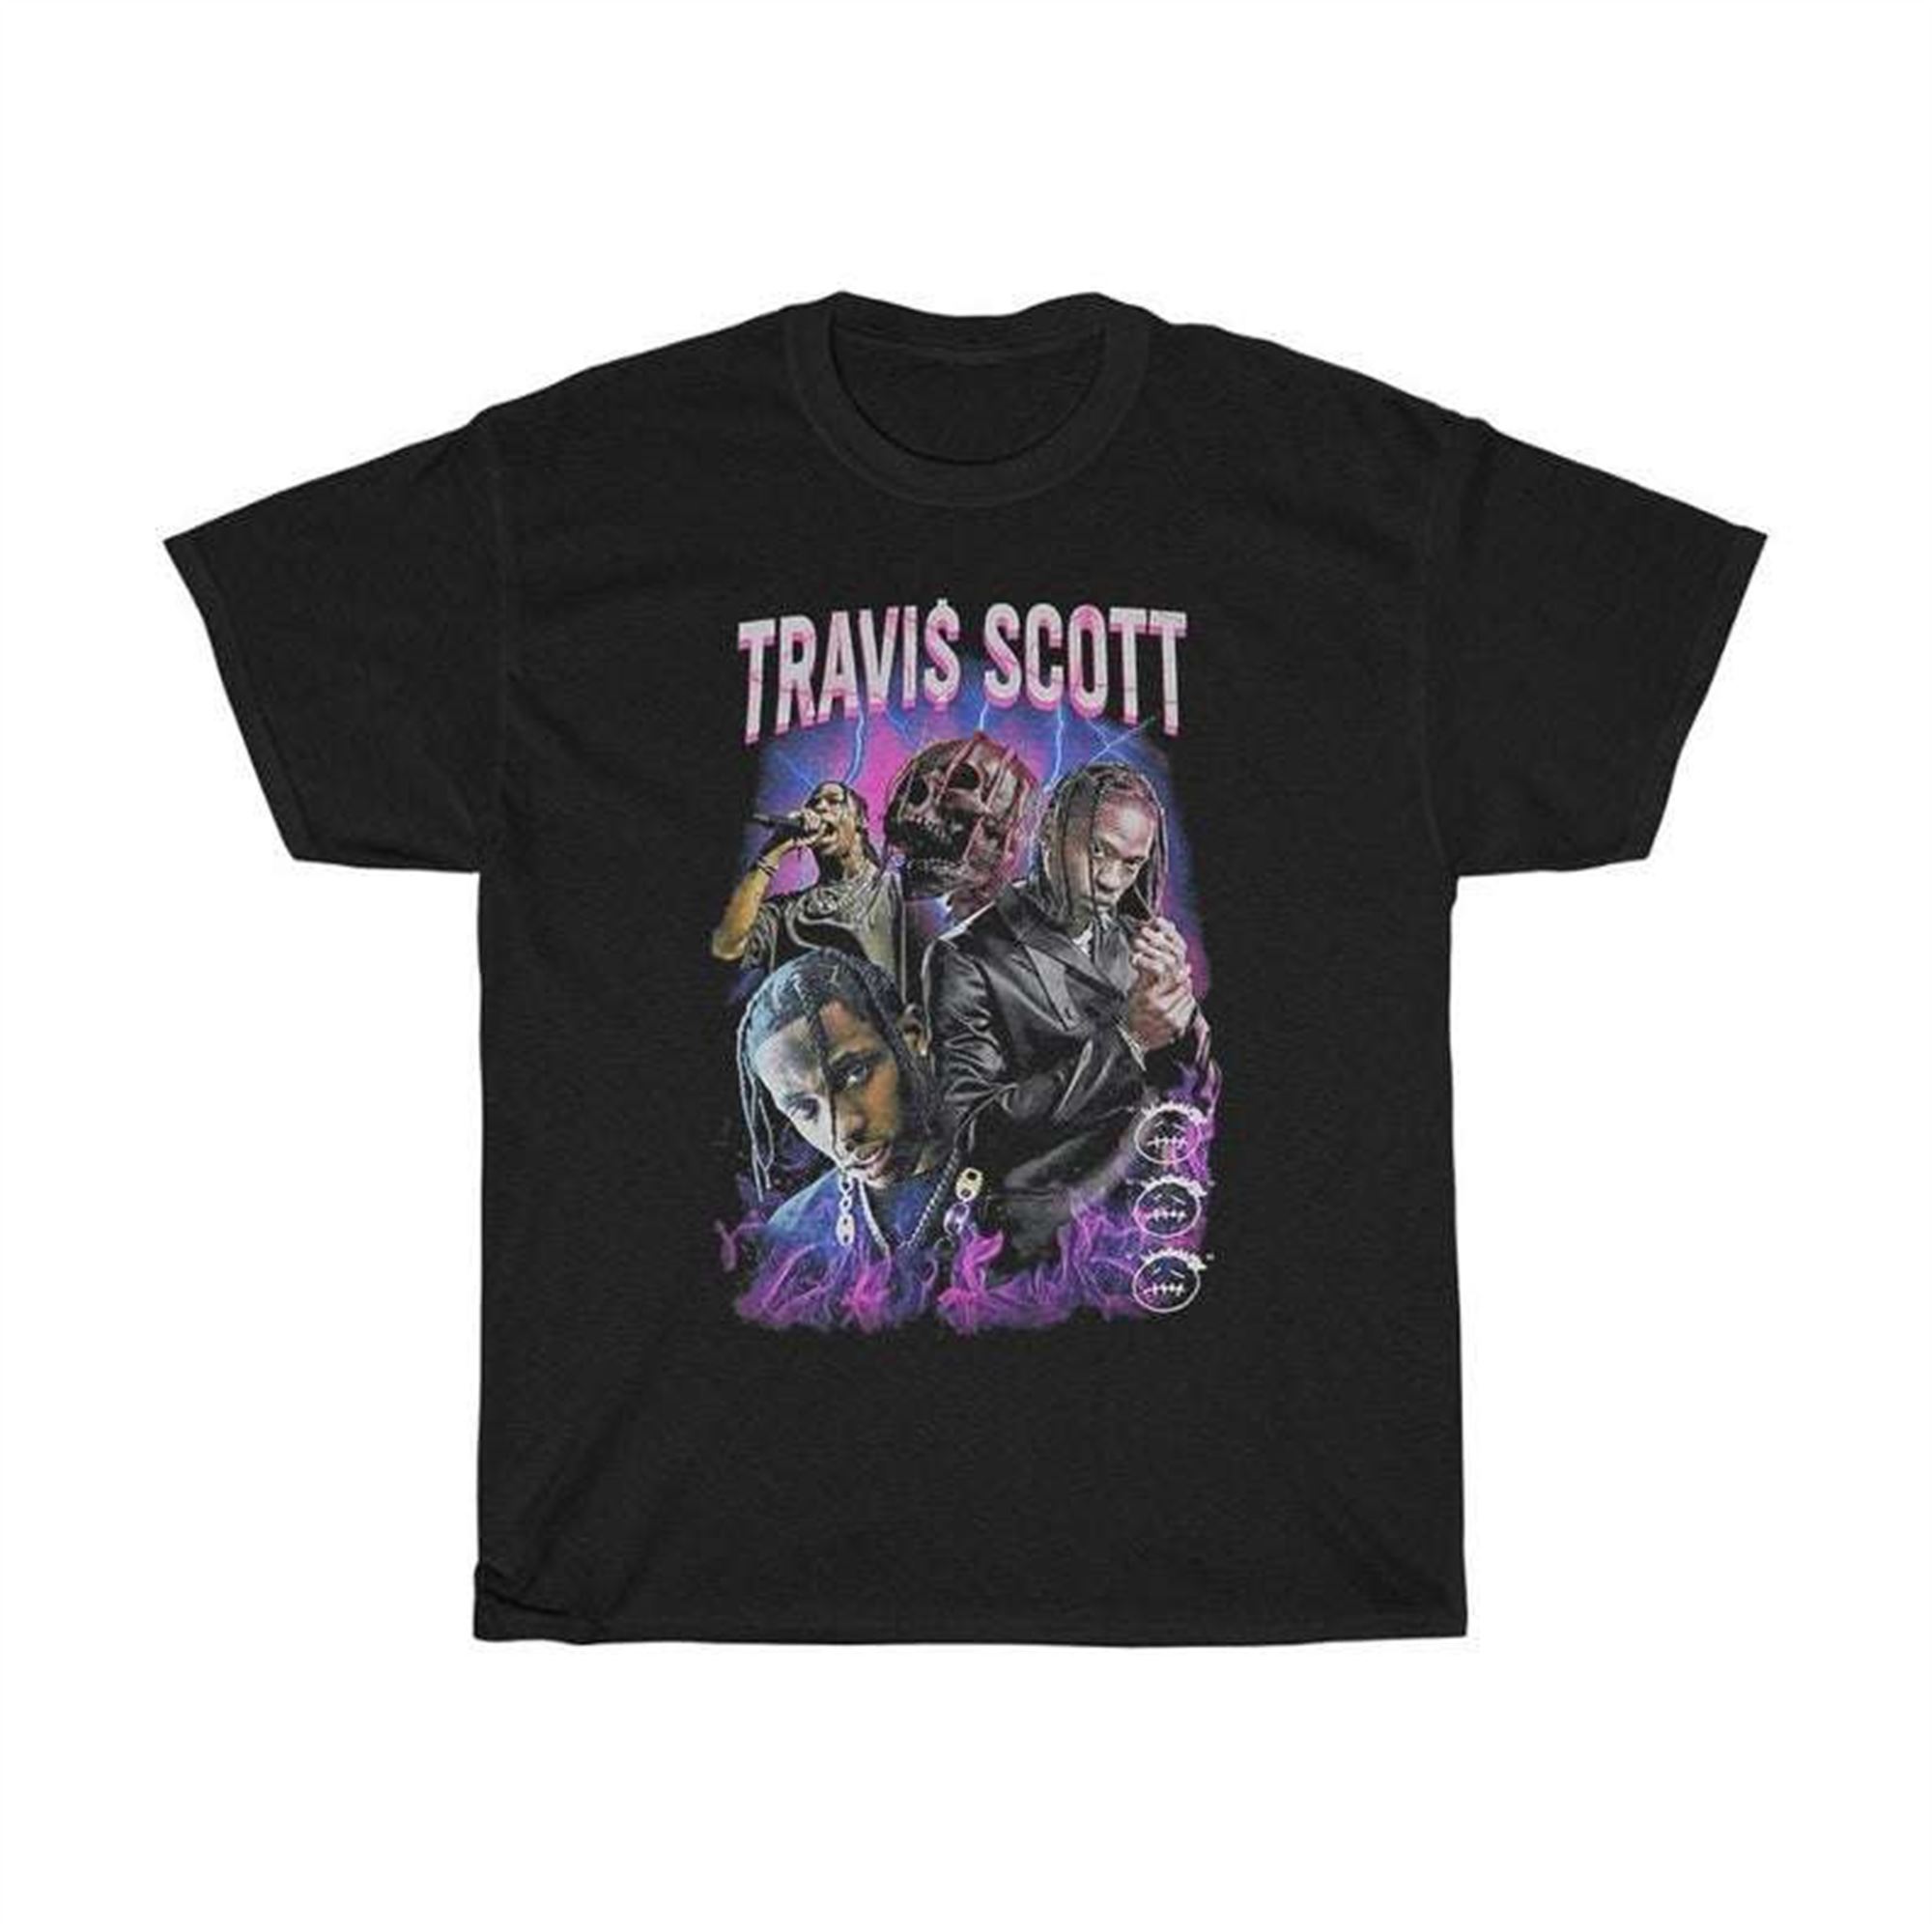 Travis Scott Rap Retro 90s T Shirt Full Size Up To 5xl